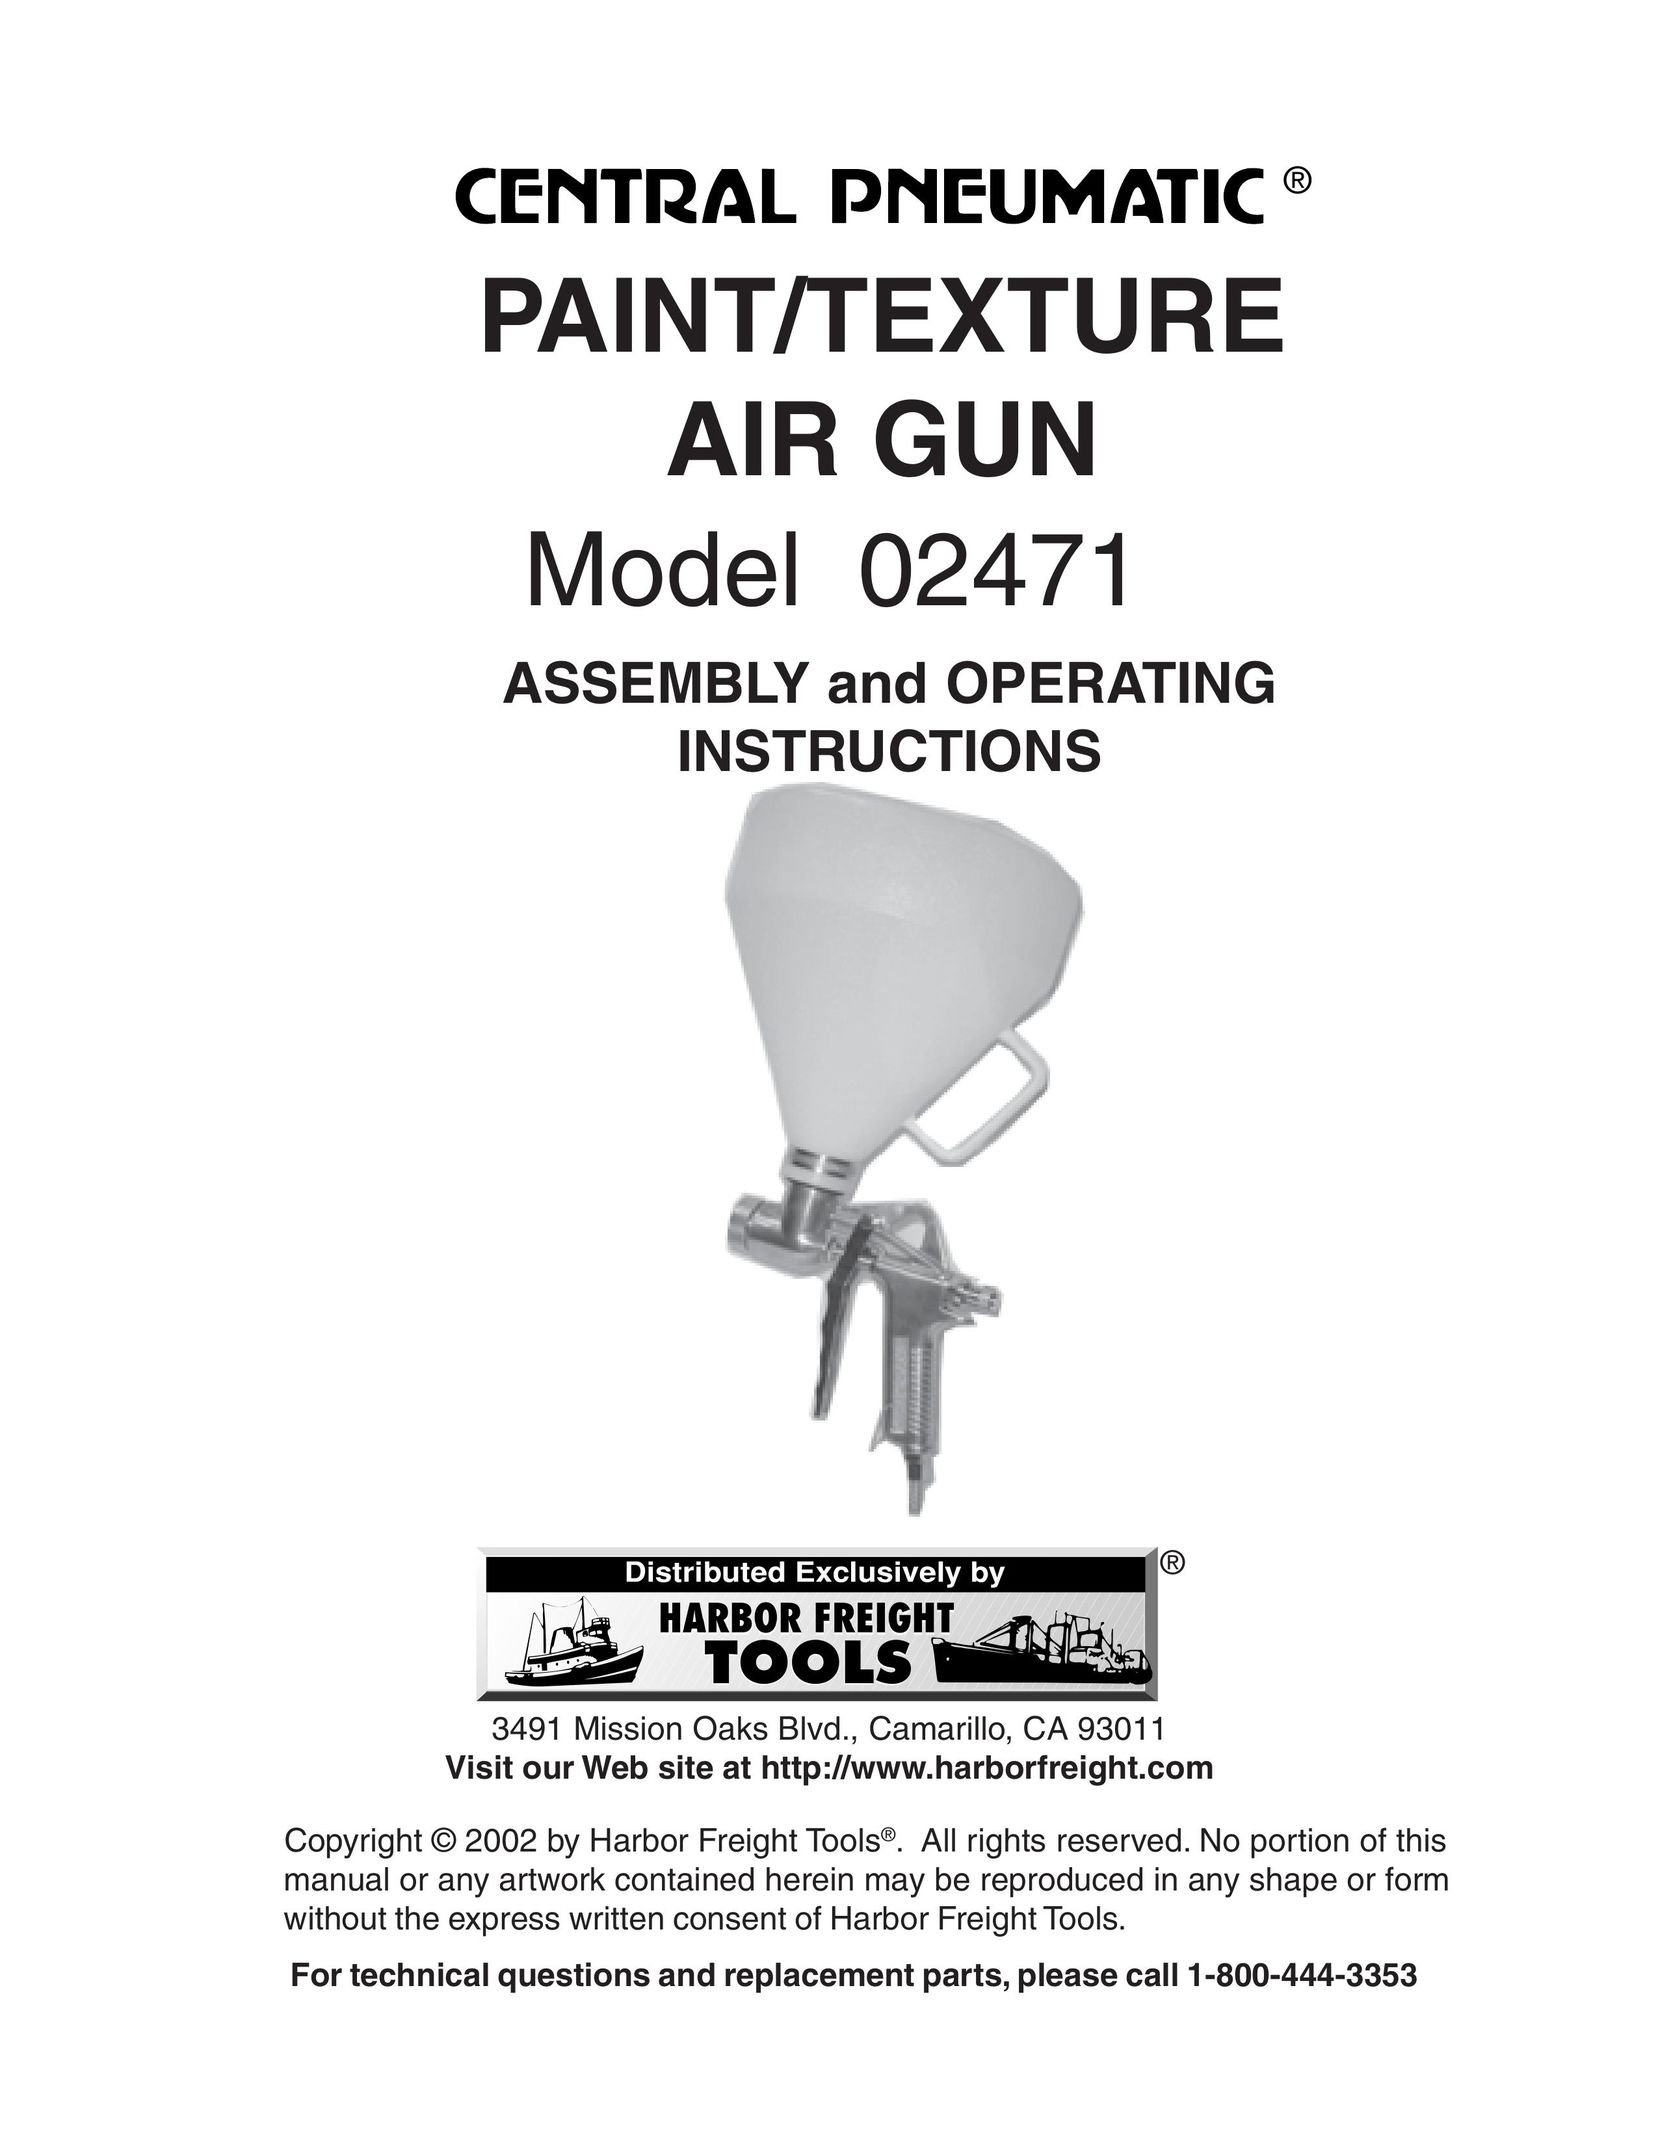 Harbor Freight Tools 02471 Paint Sprayer User Manual